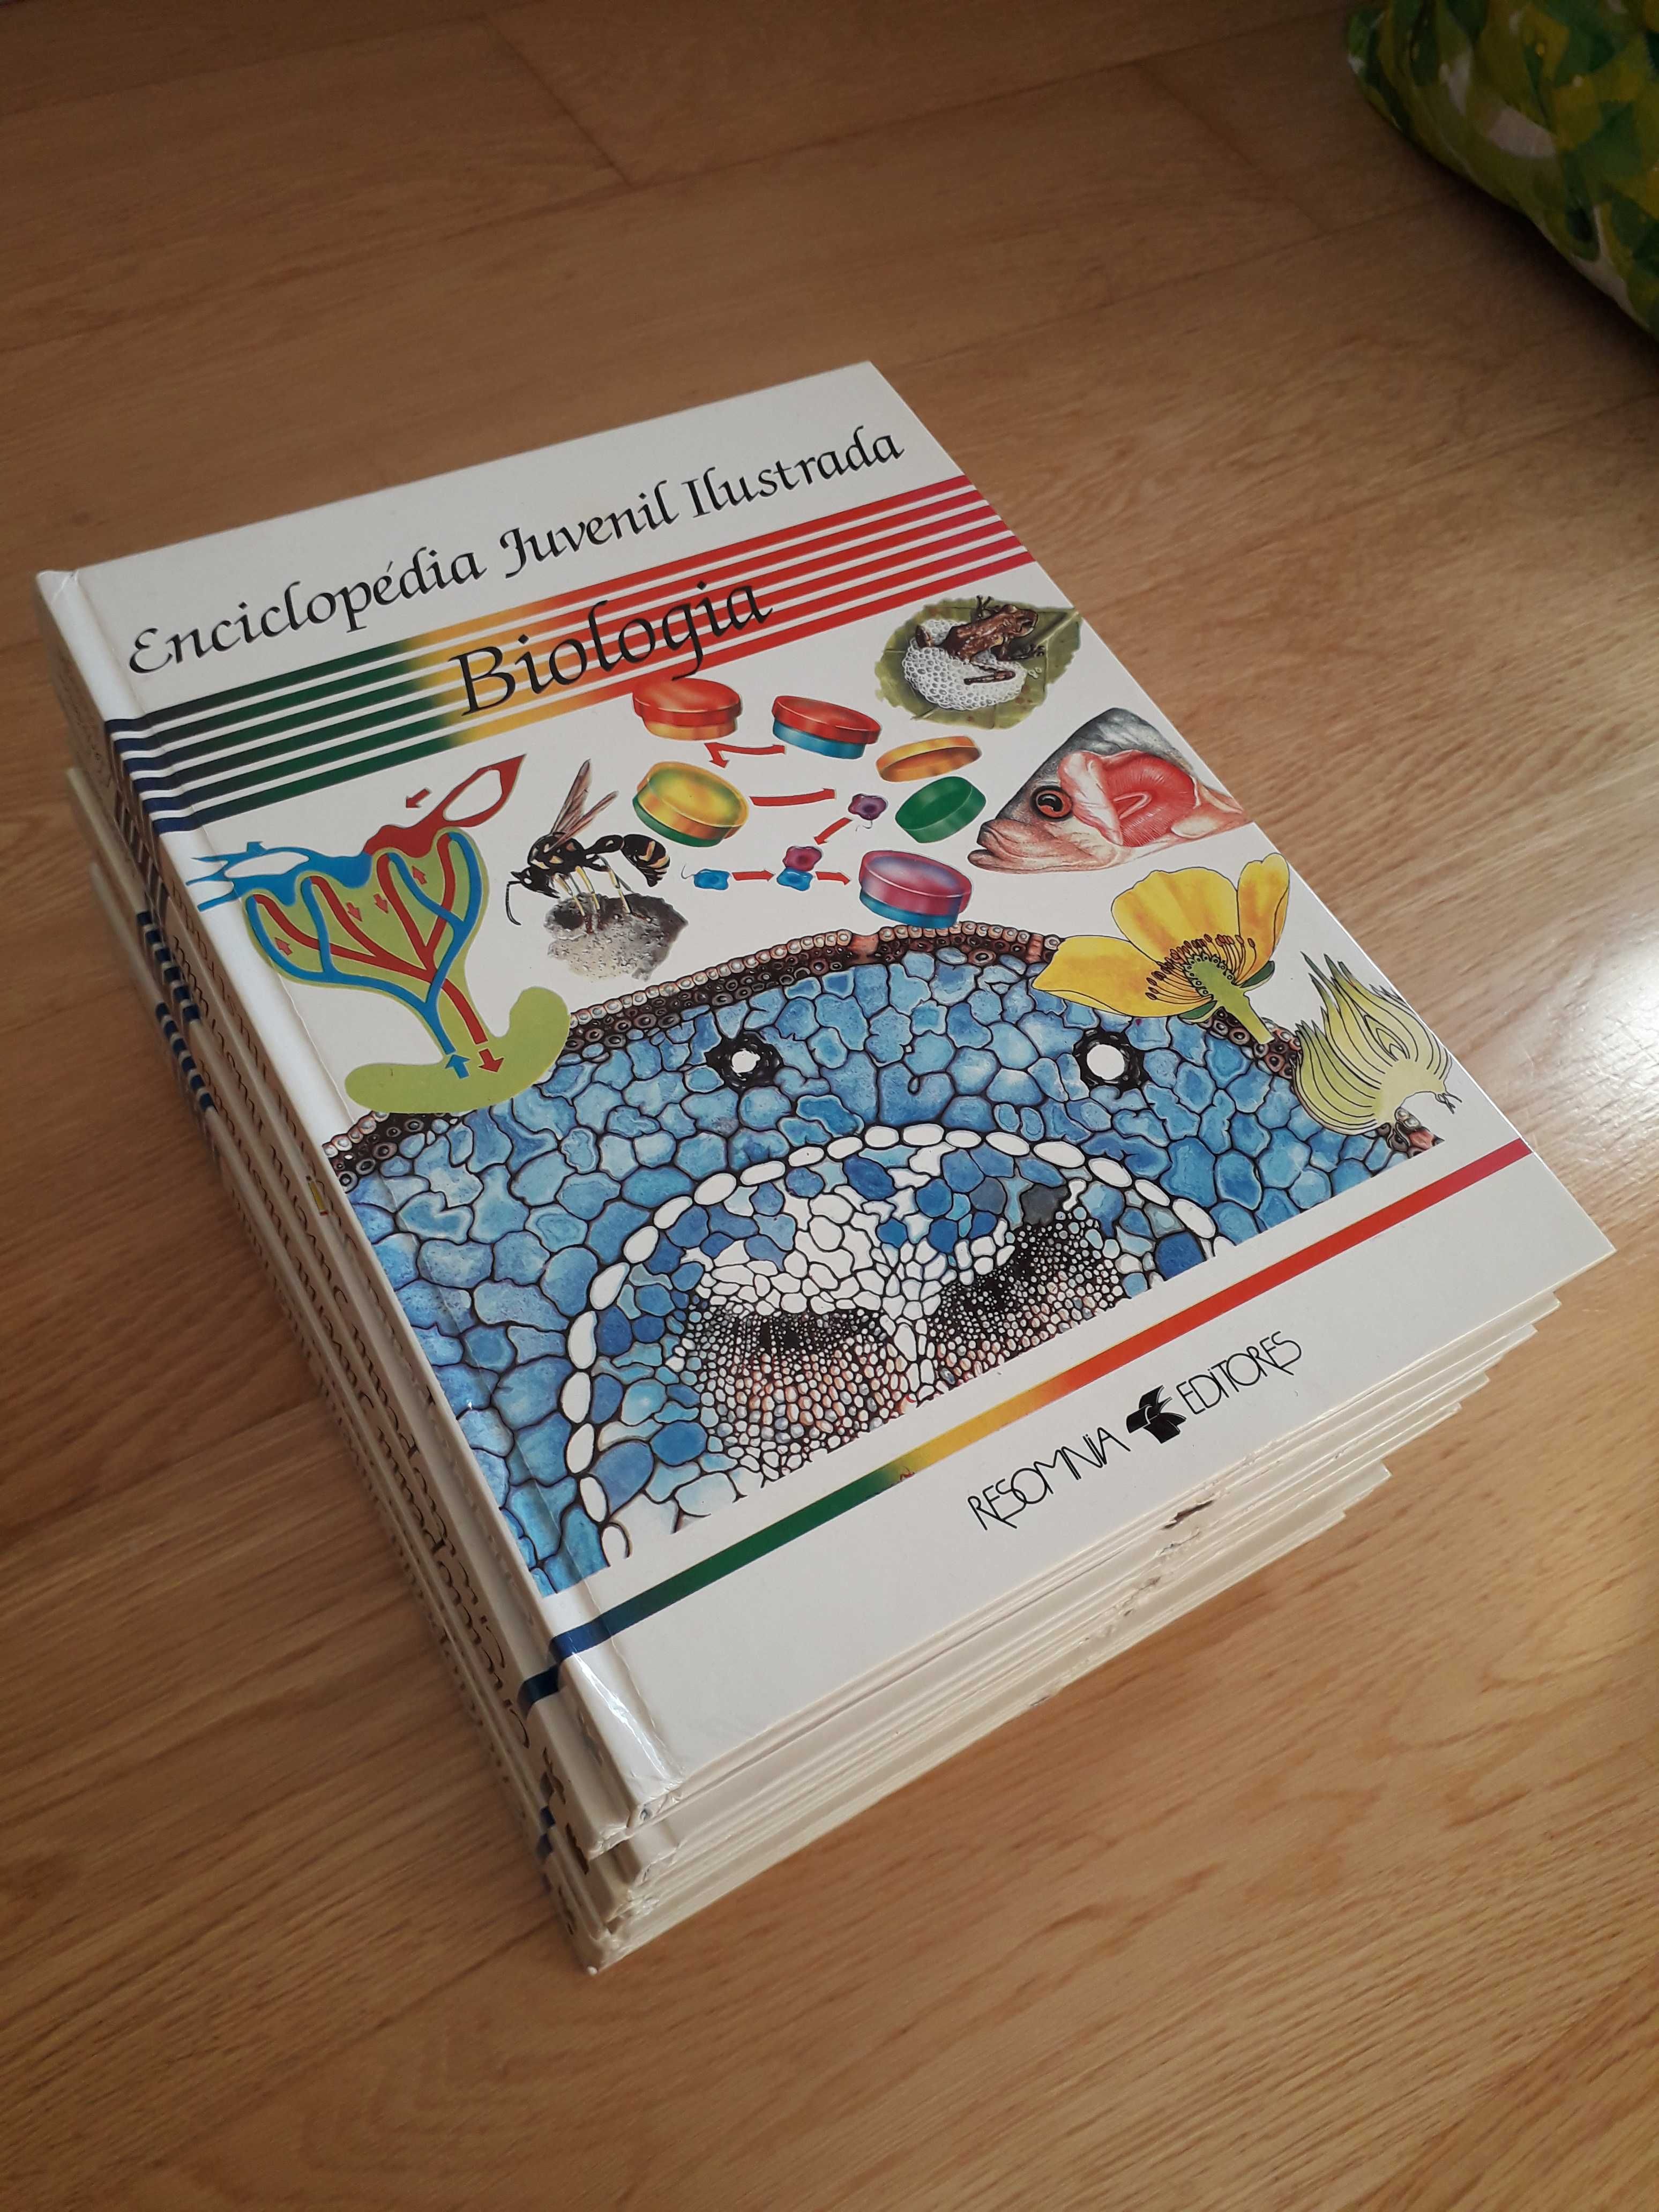 Enciclopédia Juvenil Ilustrada Completa